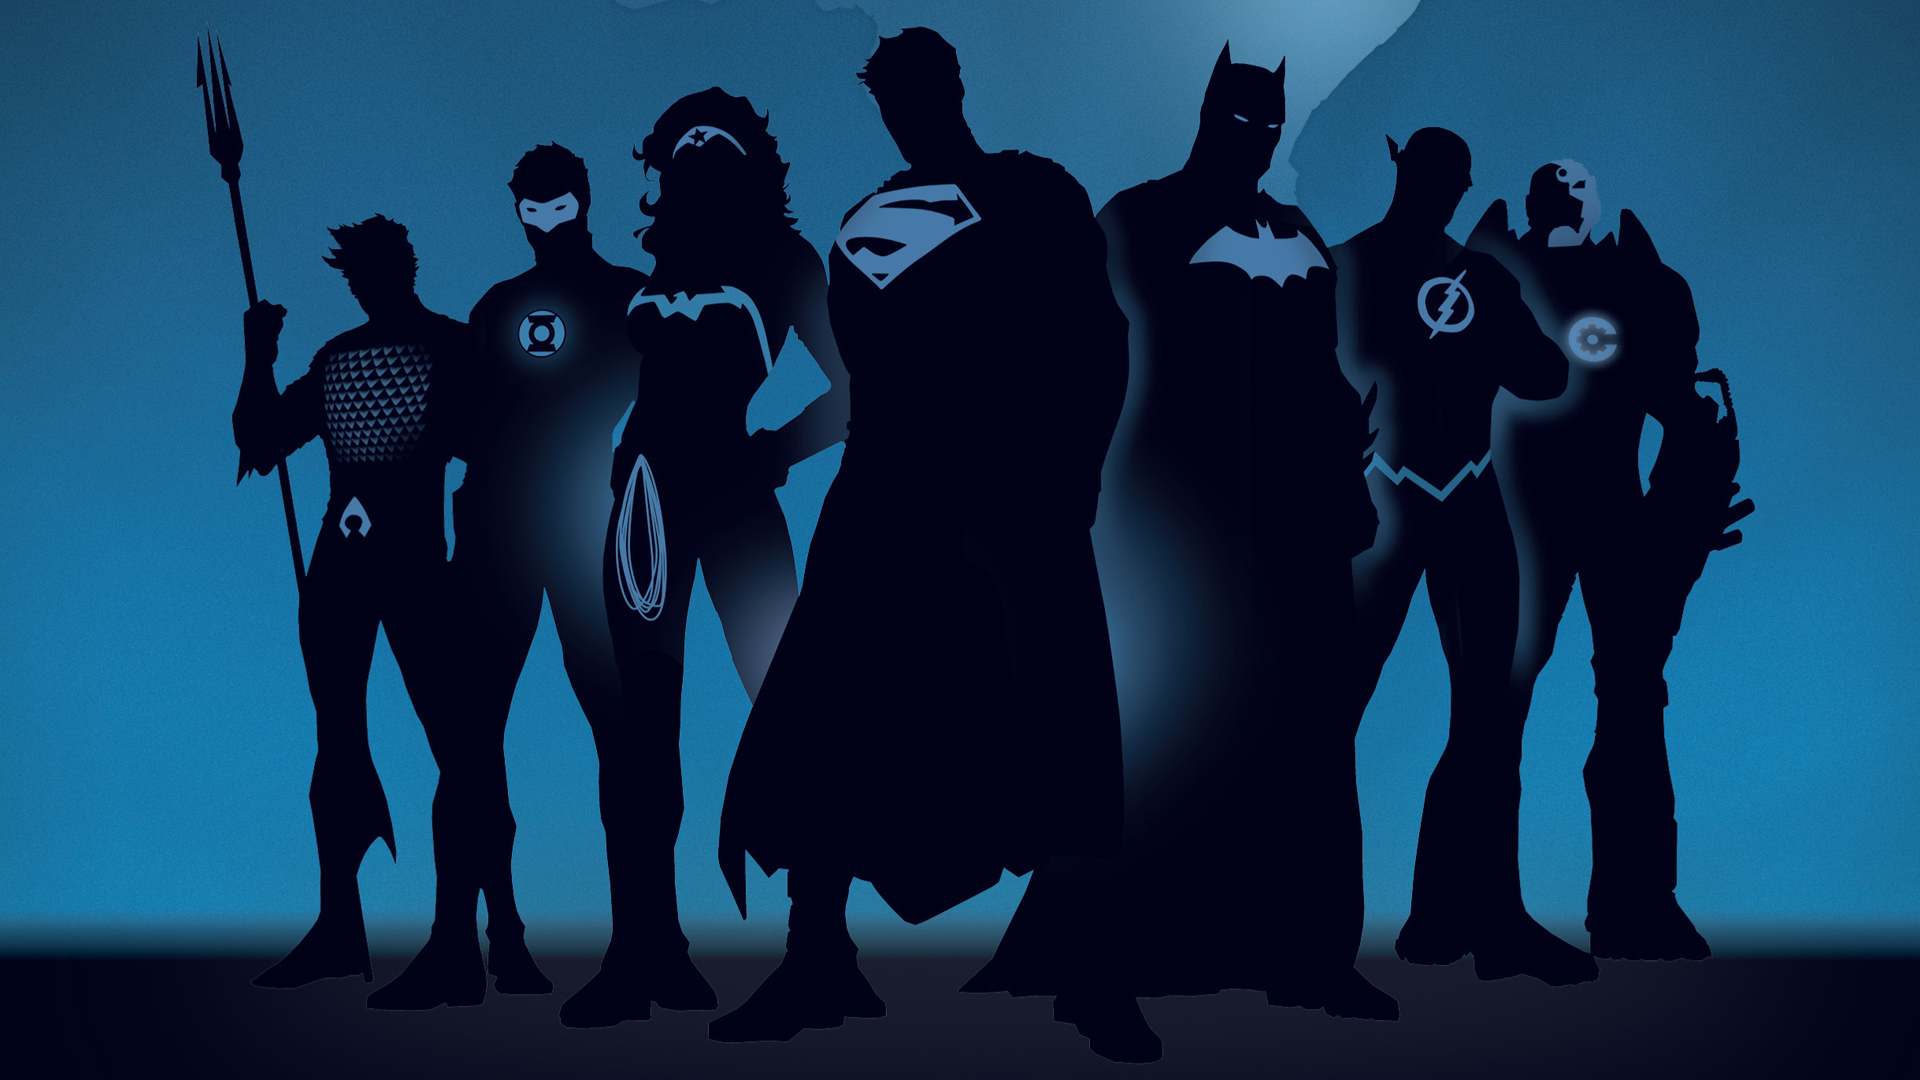 batman, cyborg (dc comics), superman, dc comics, diana prince, flash, comics, bruce wayne, wonder woman, aquaman, the dark knight, justice league, barry allen, green lantern